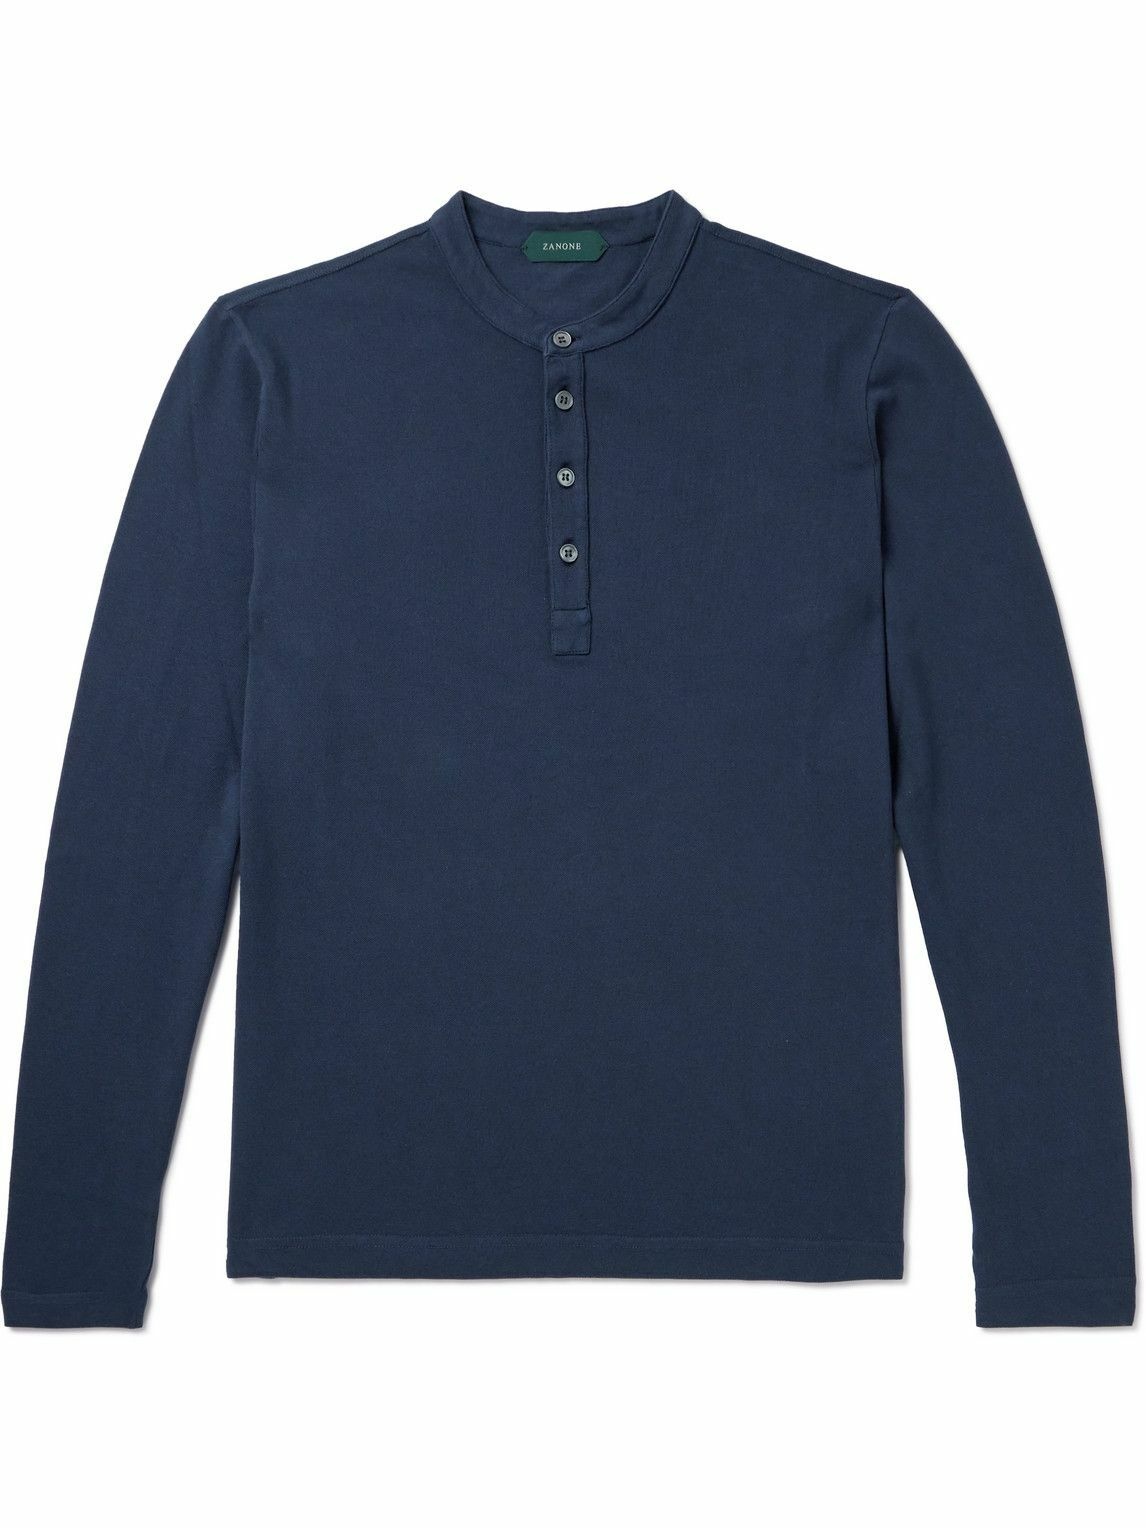 Photo: Incotex - Zanone Garment-Dyed Cotton-Piqué Henley T-Shirt - Blue